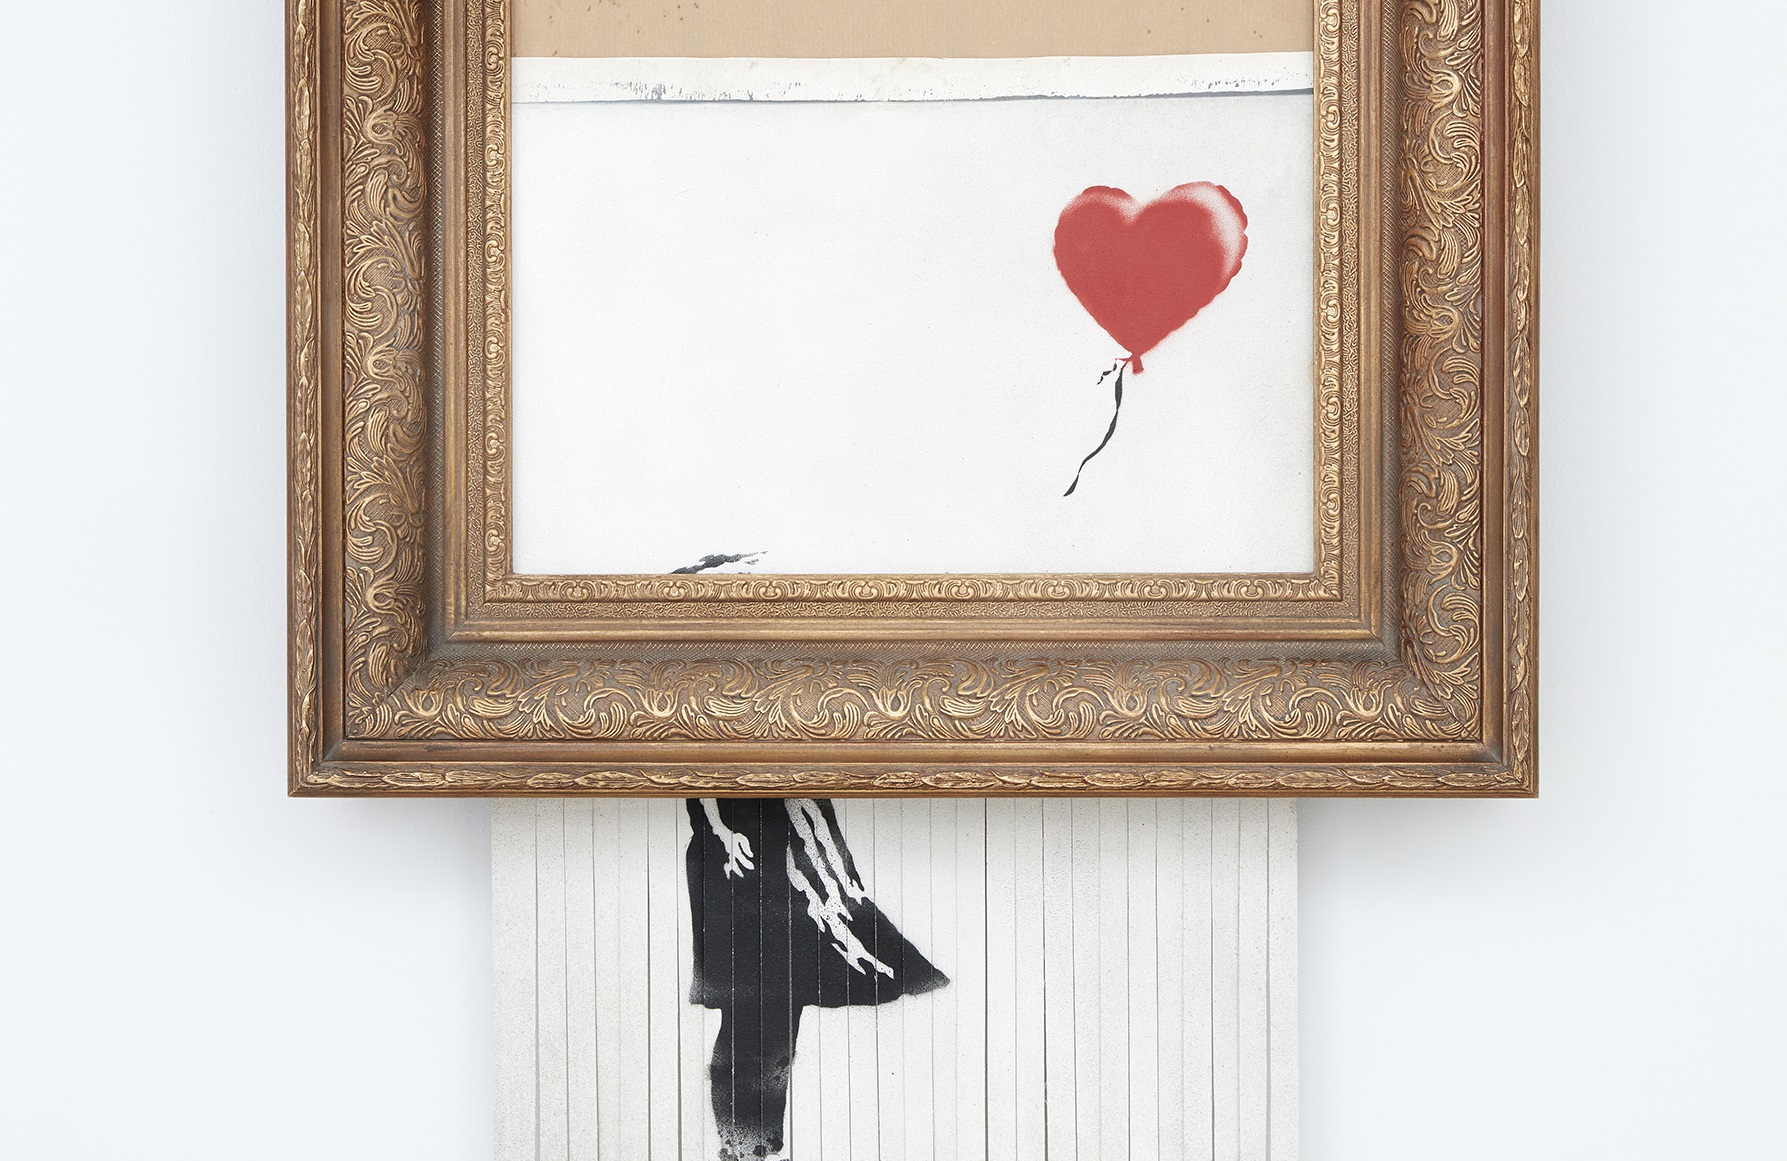 Il Banksy tritato torna all’asta. Sotheby’s presenta Love is in the Bin